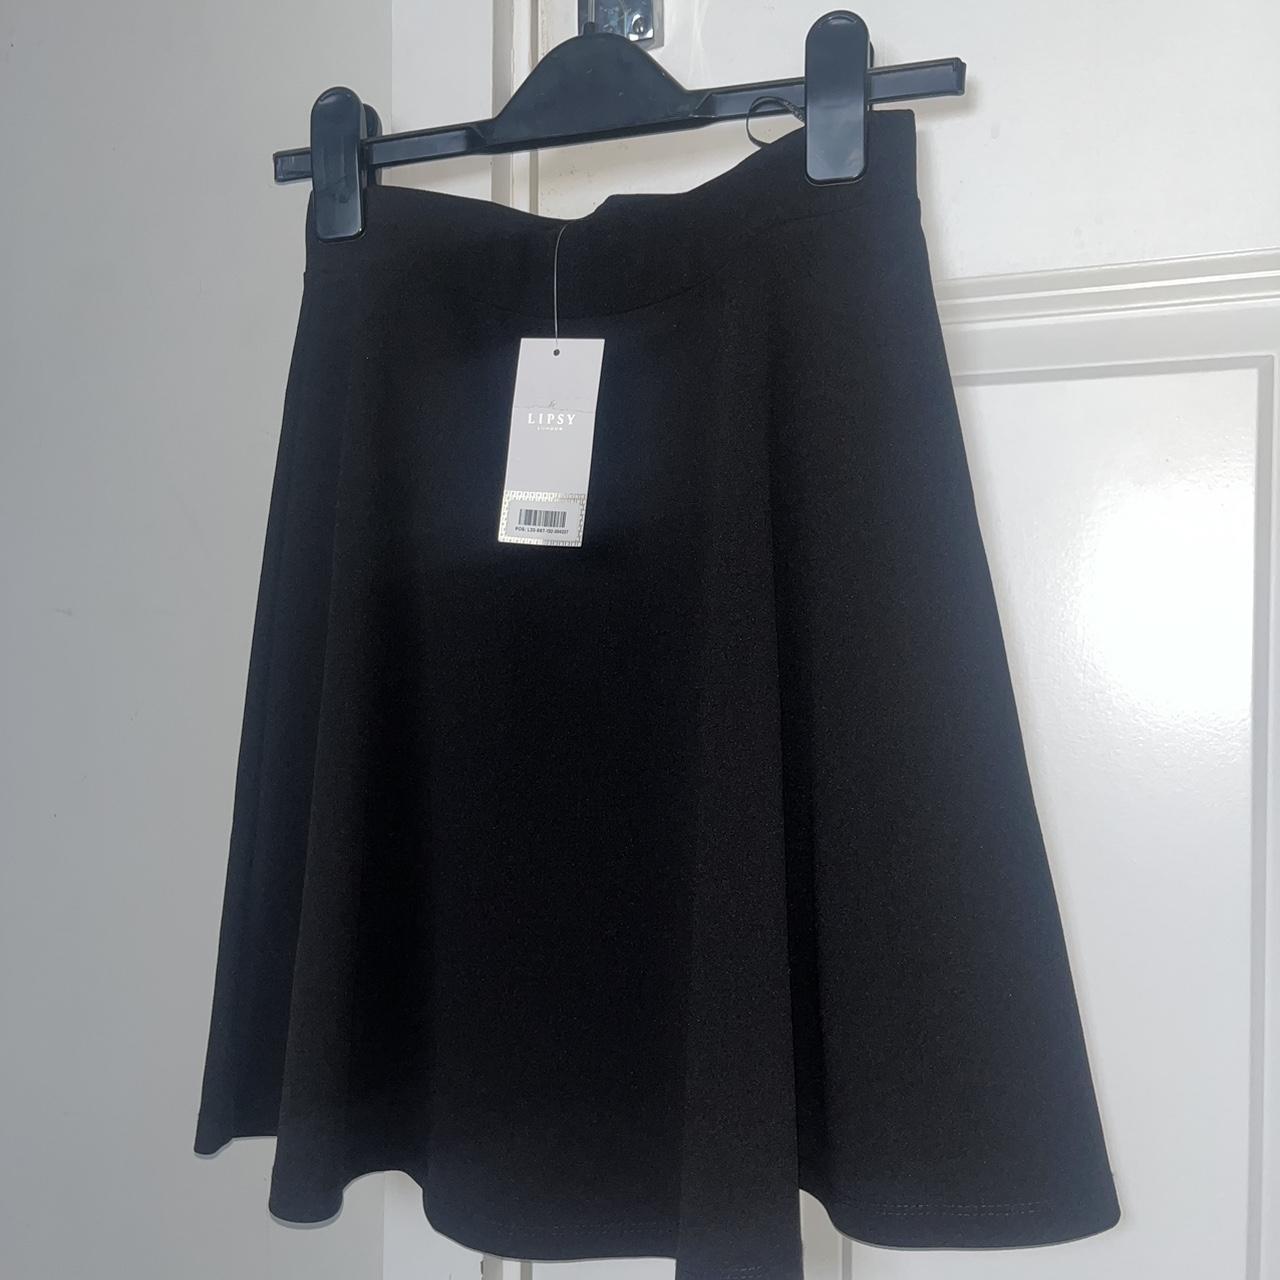 Buy Lipsy Black Jersey Flippy Mini Skater Skirt from the Next UK